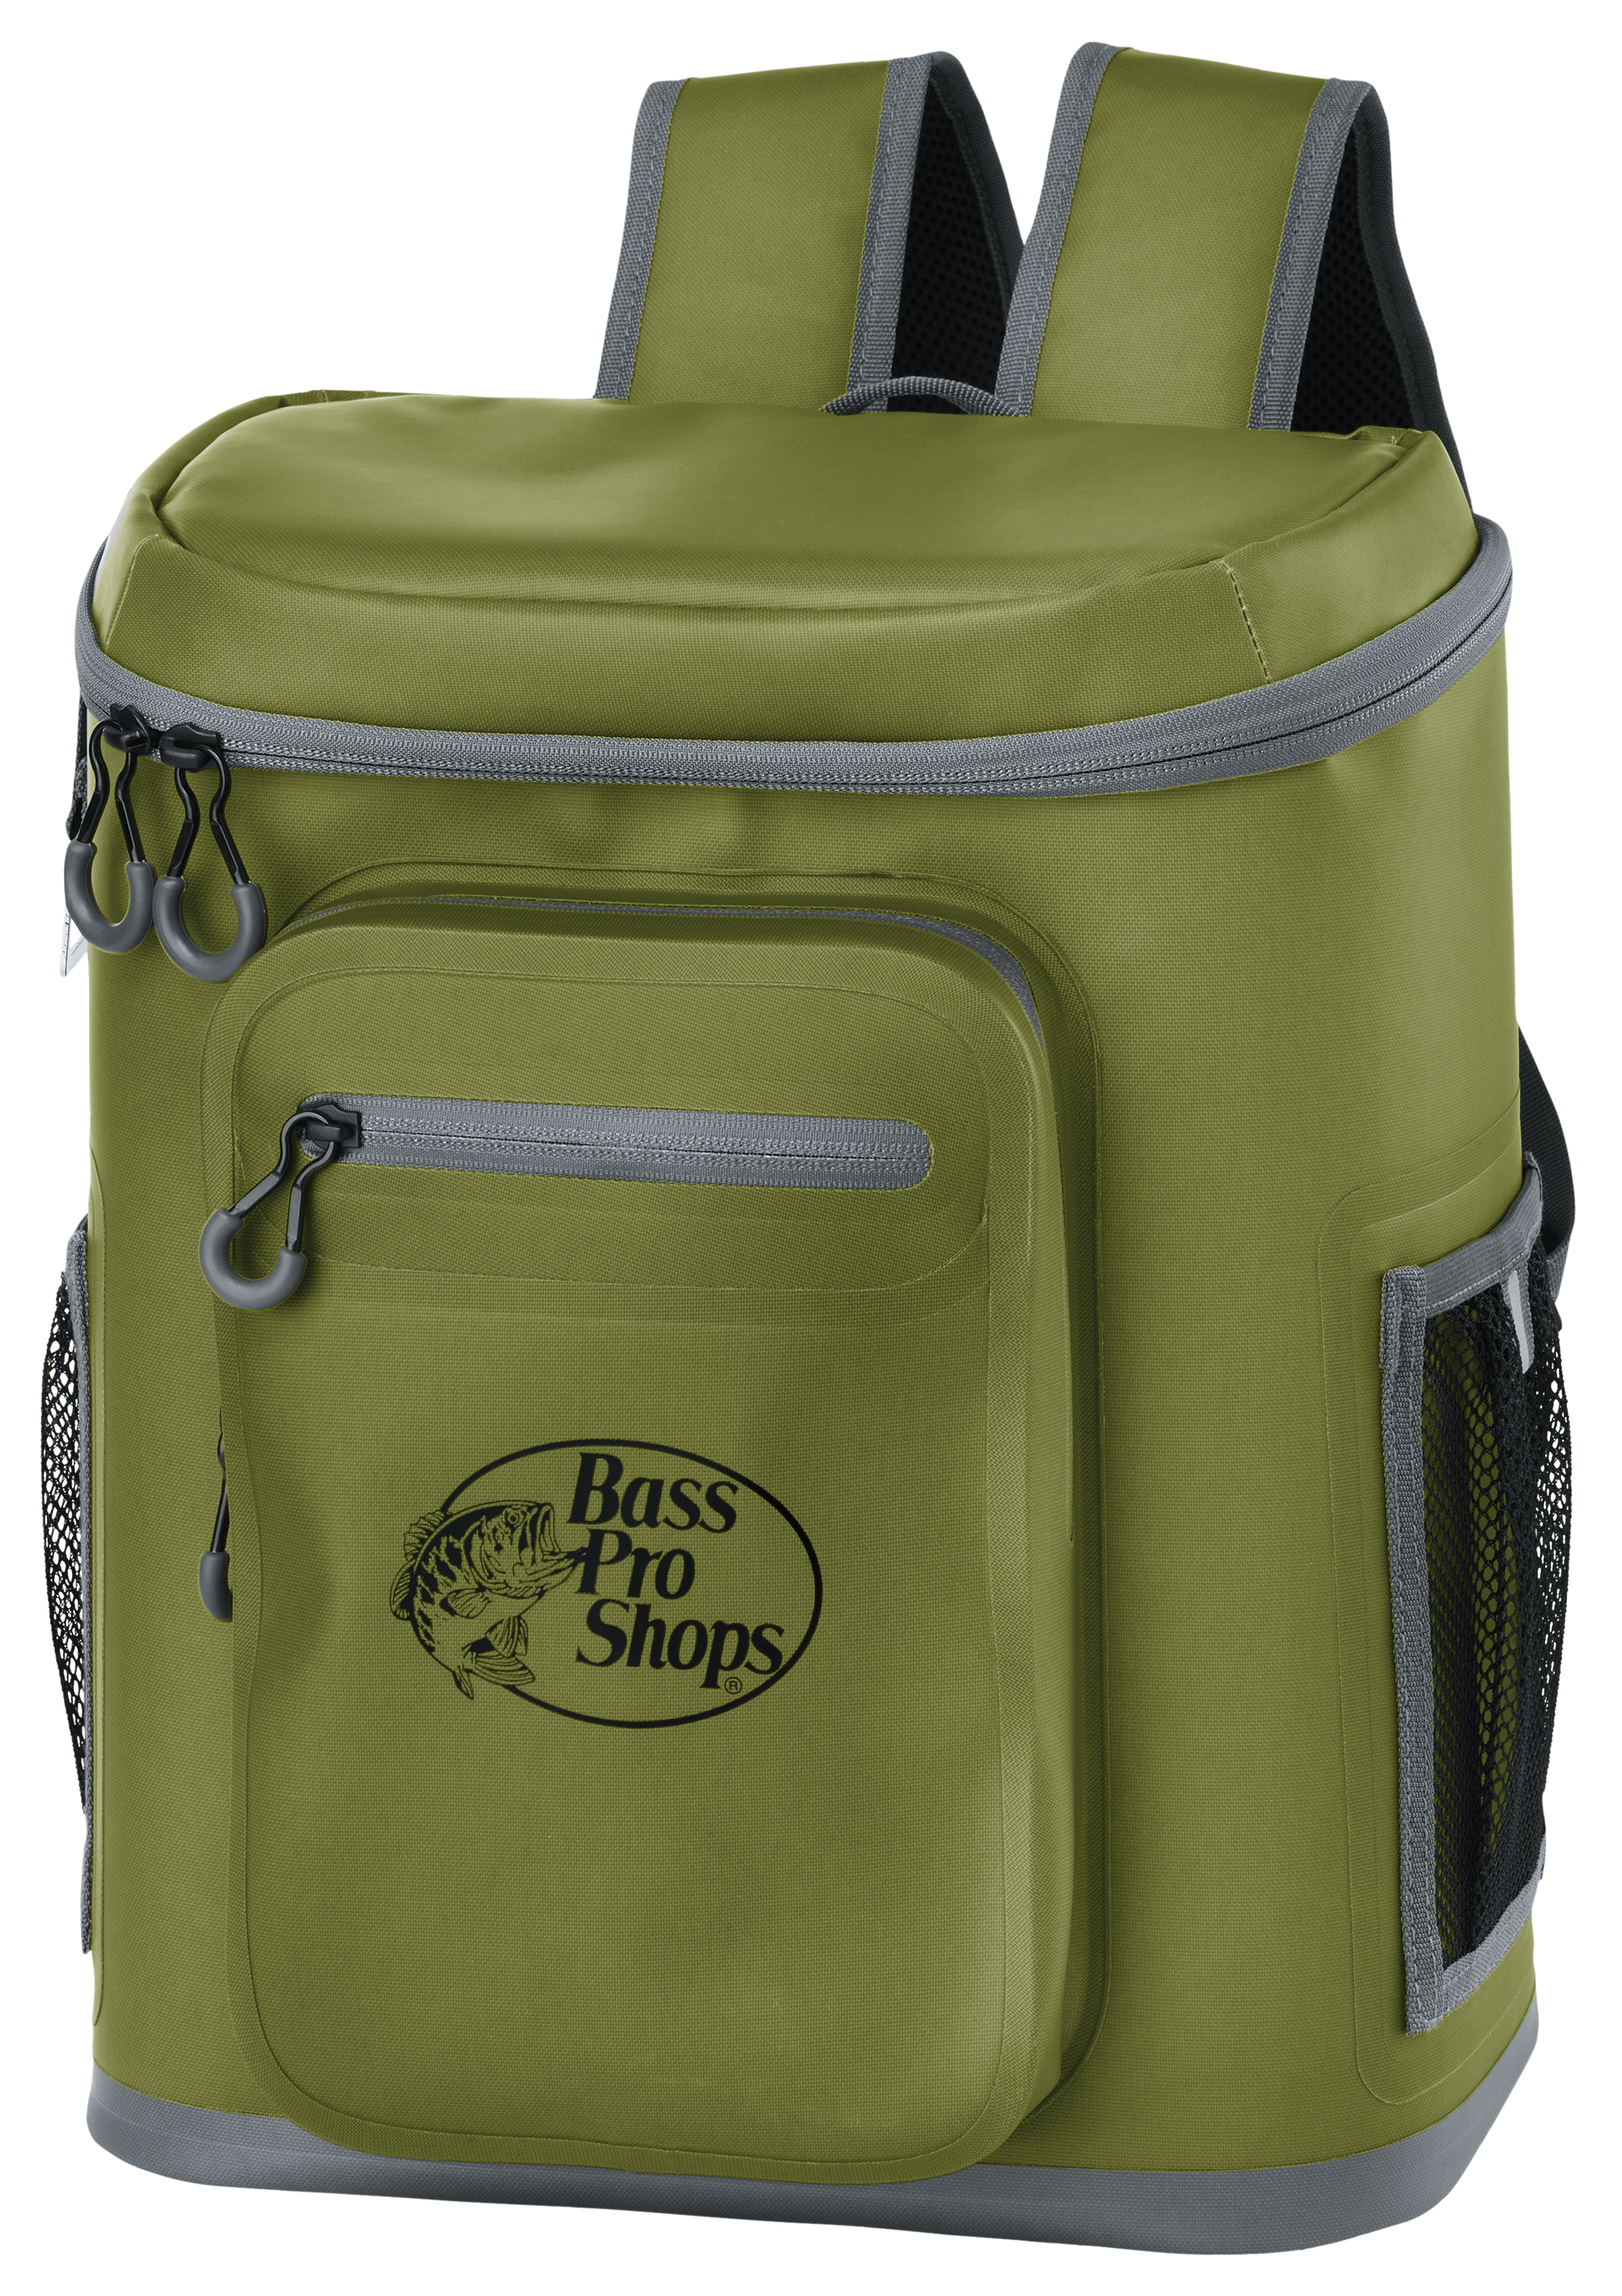 Bass Pro Shops Backpack Cooler - Green